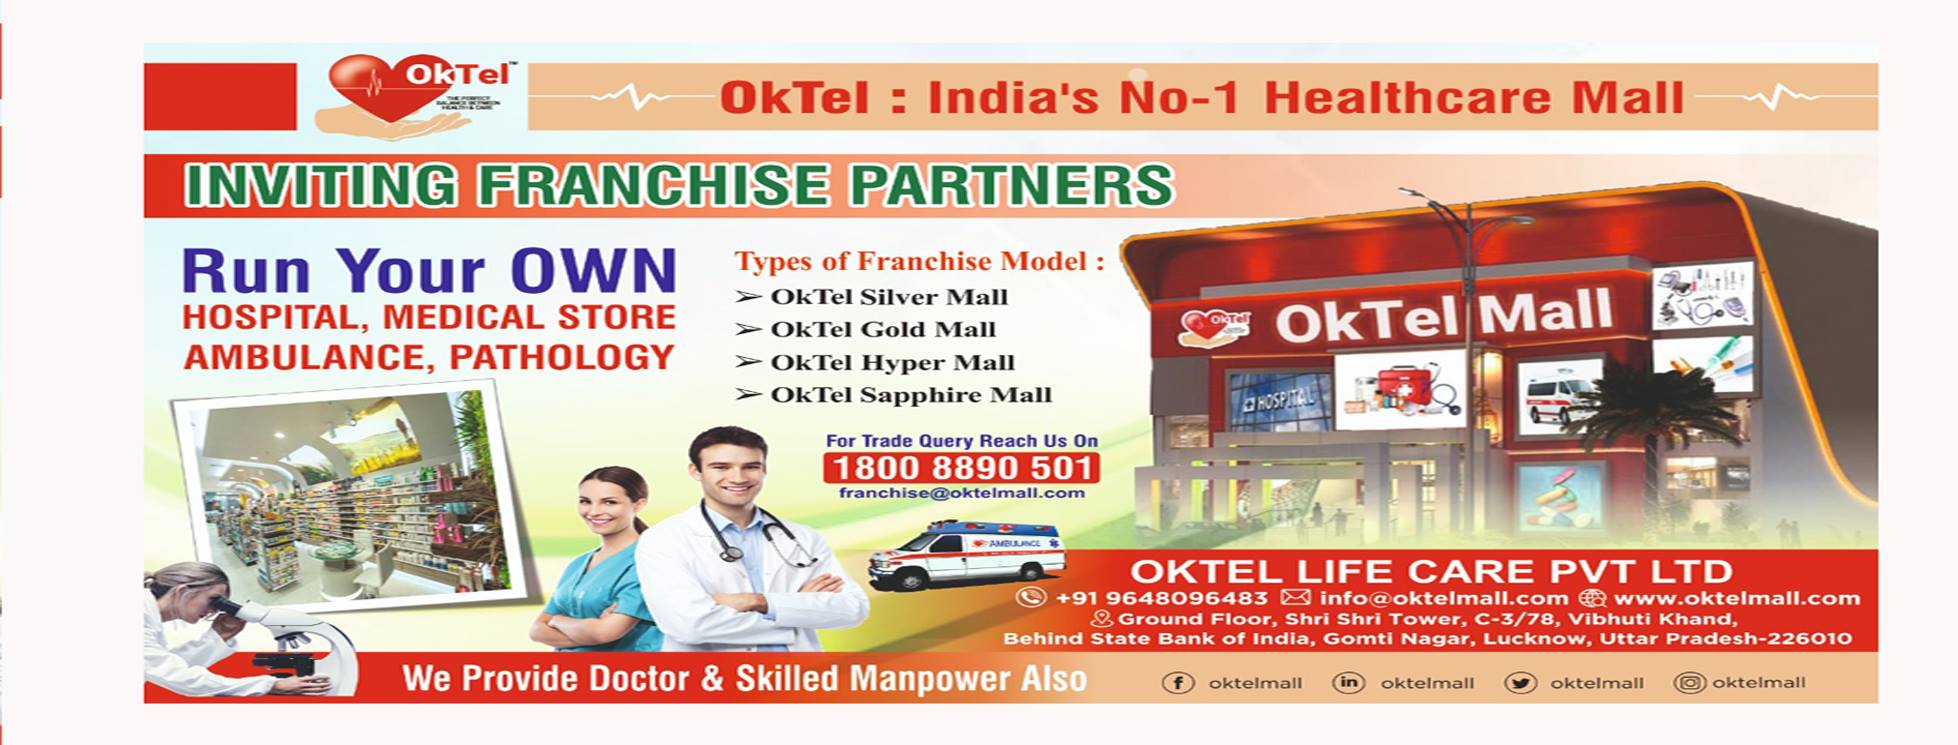 OkTel Healthcare Mall